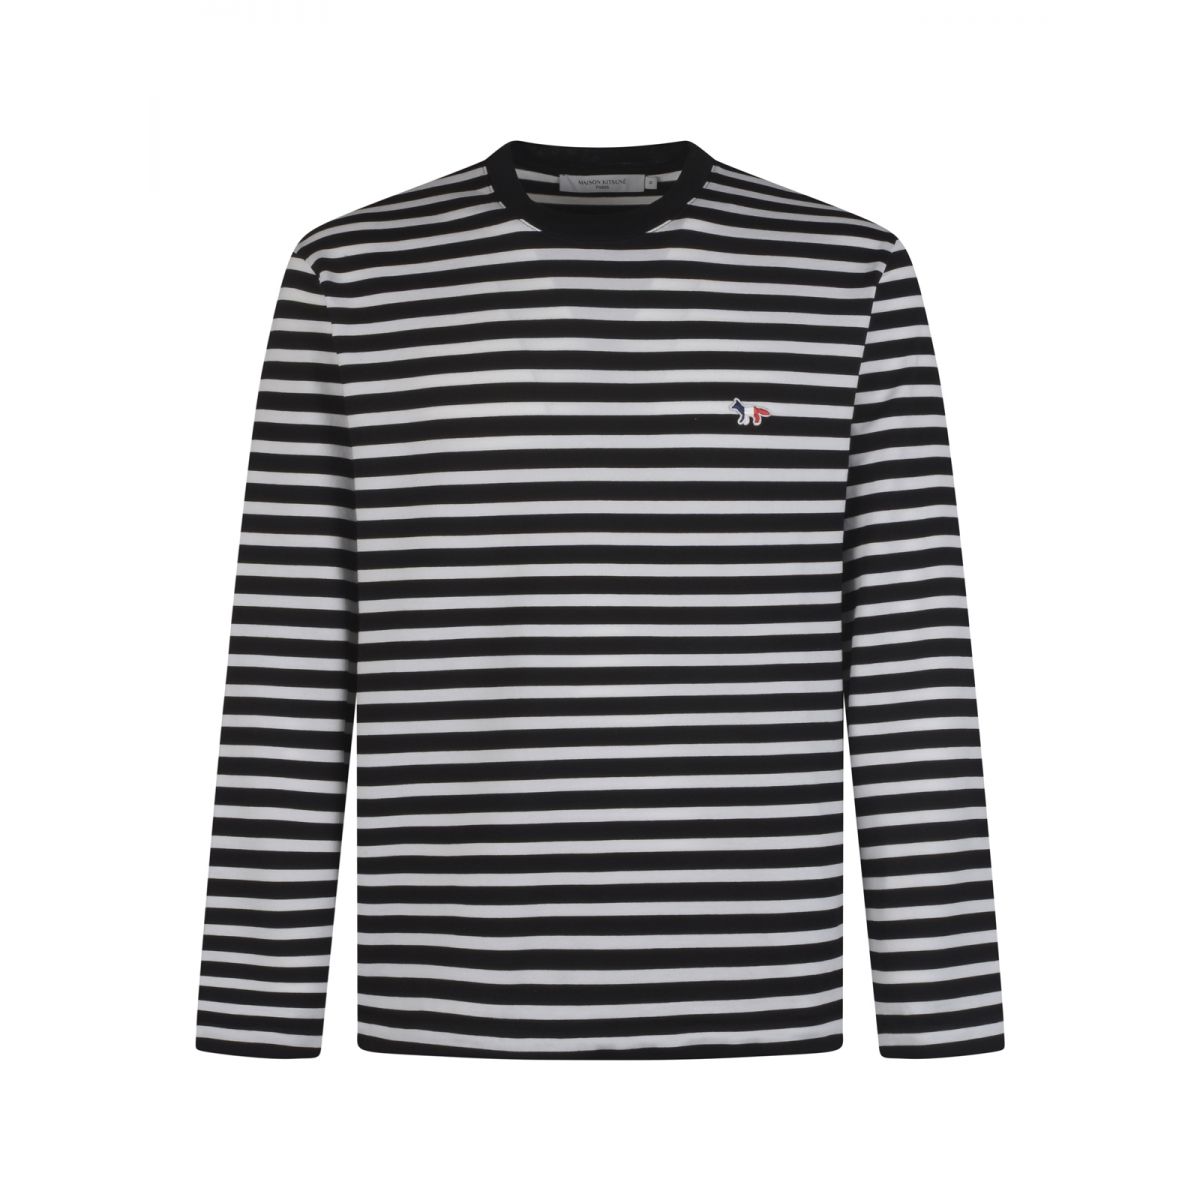 MAISON KITSUNE - Black striped long sleeve t-shirt Tricolor Fox